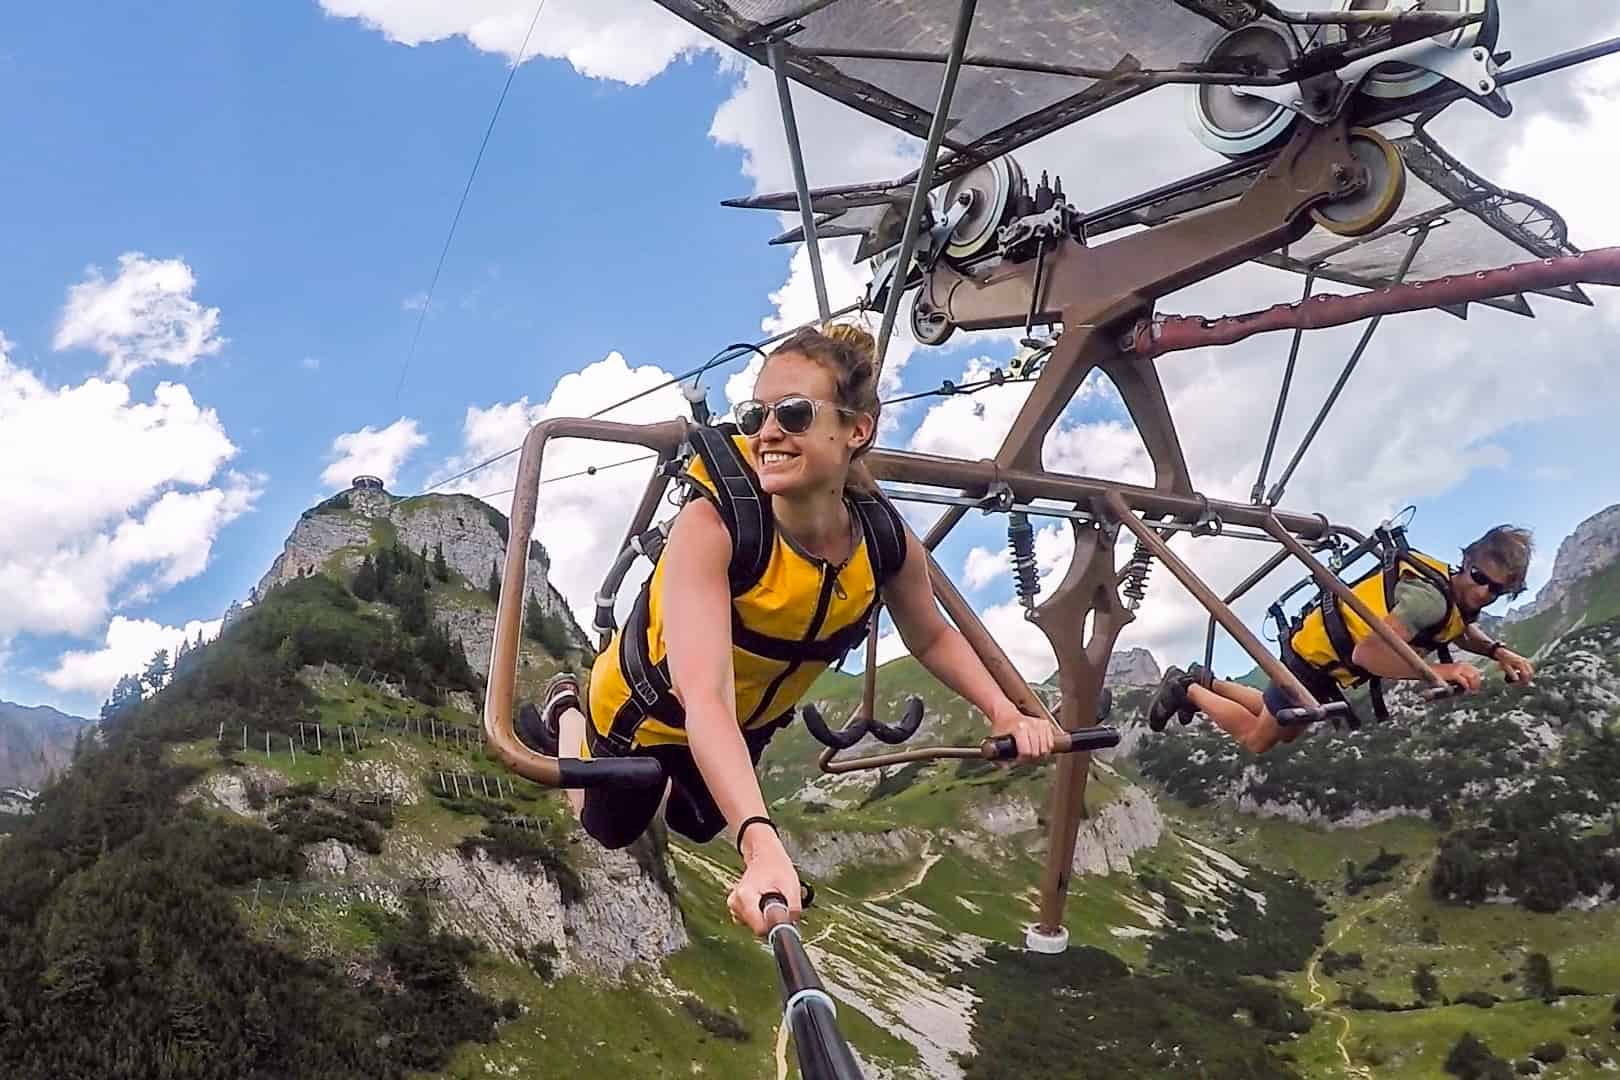 Skyglider Airrofan ride in Achensee, Tirol, Austria